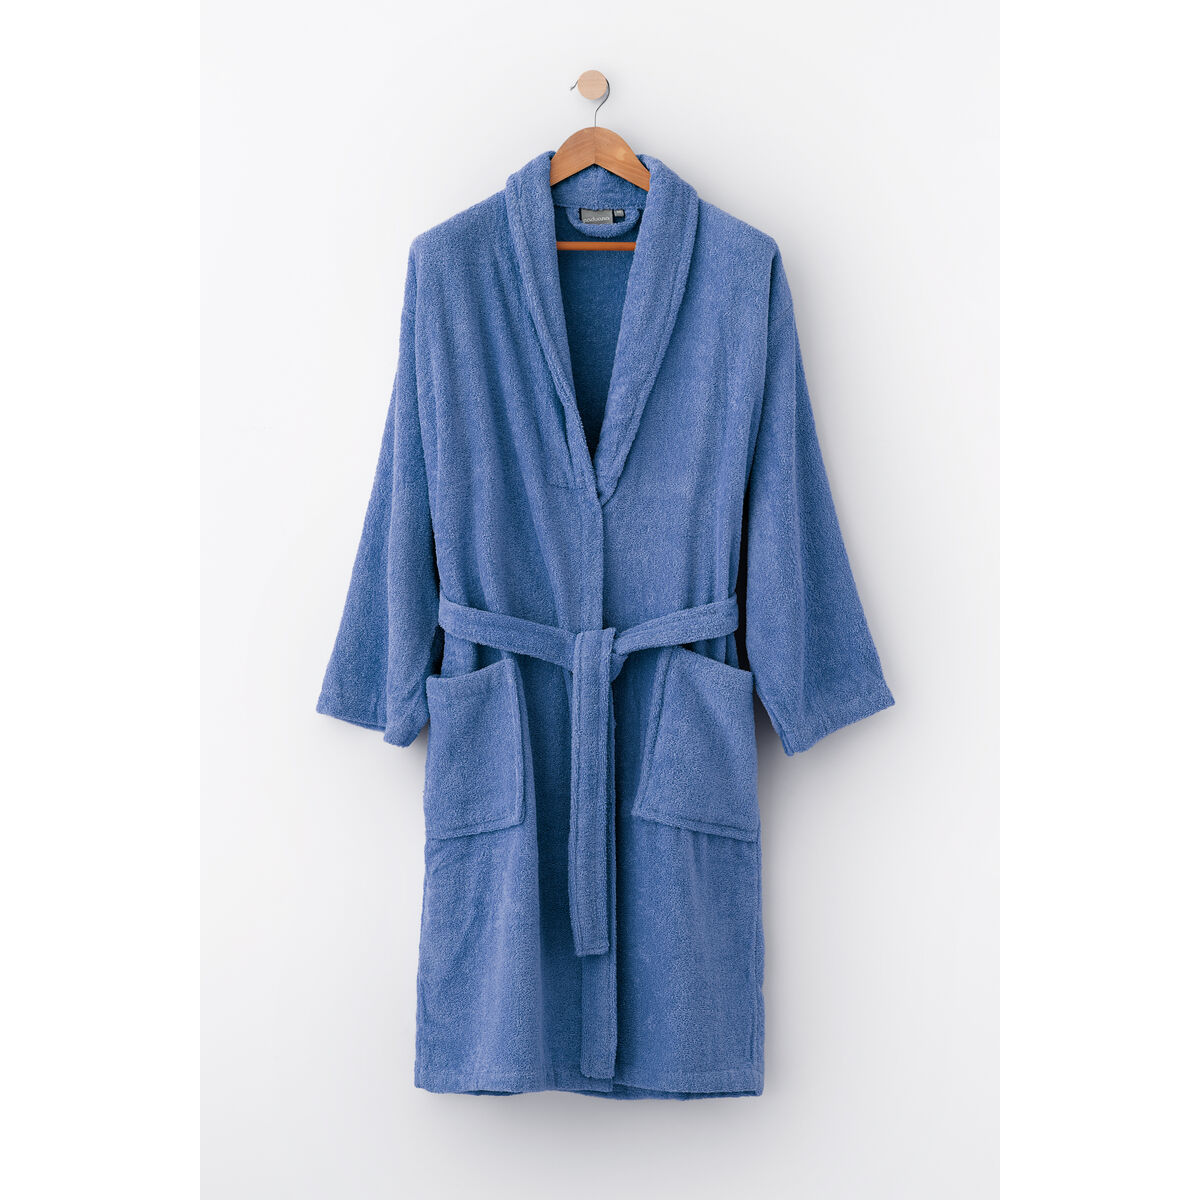 Dressing Gown Paduana Blue 450 g/m² 100% cotton